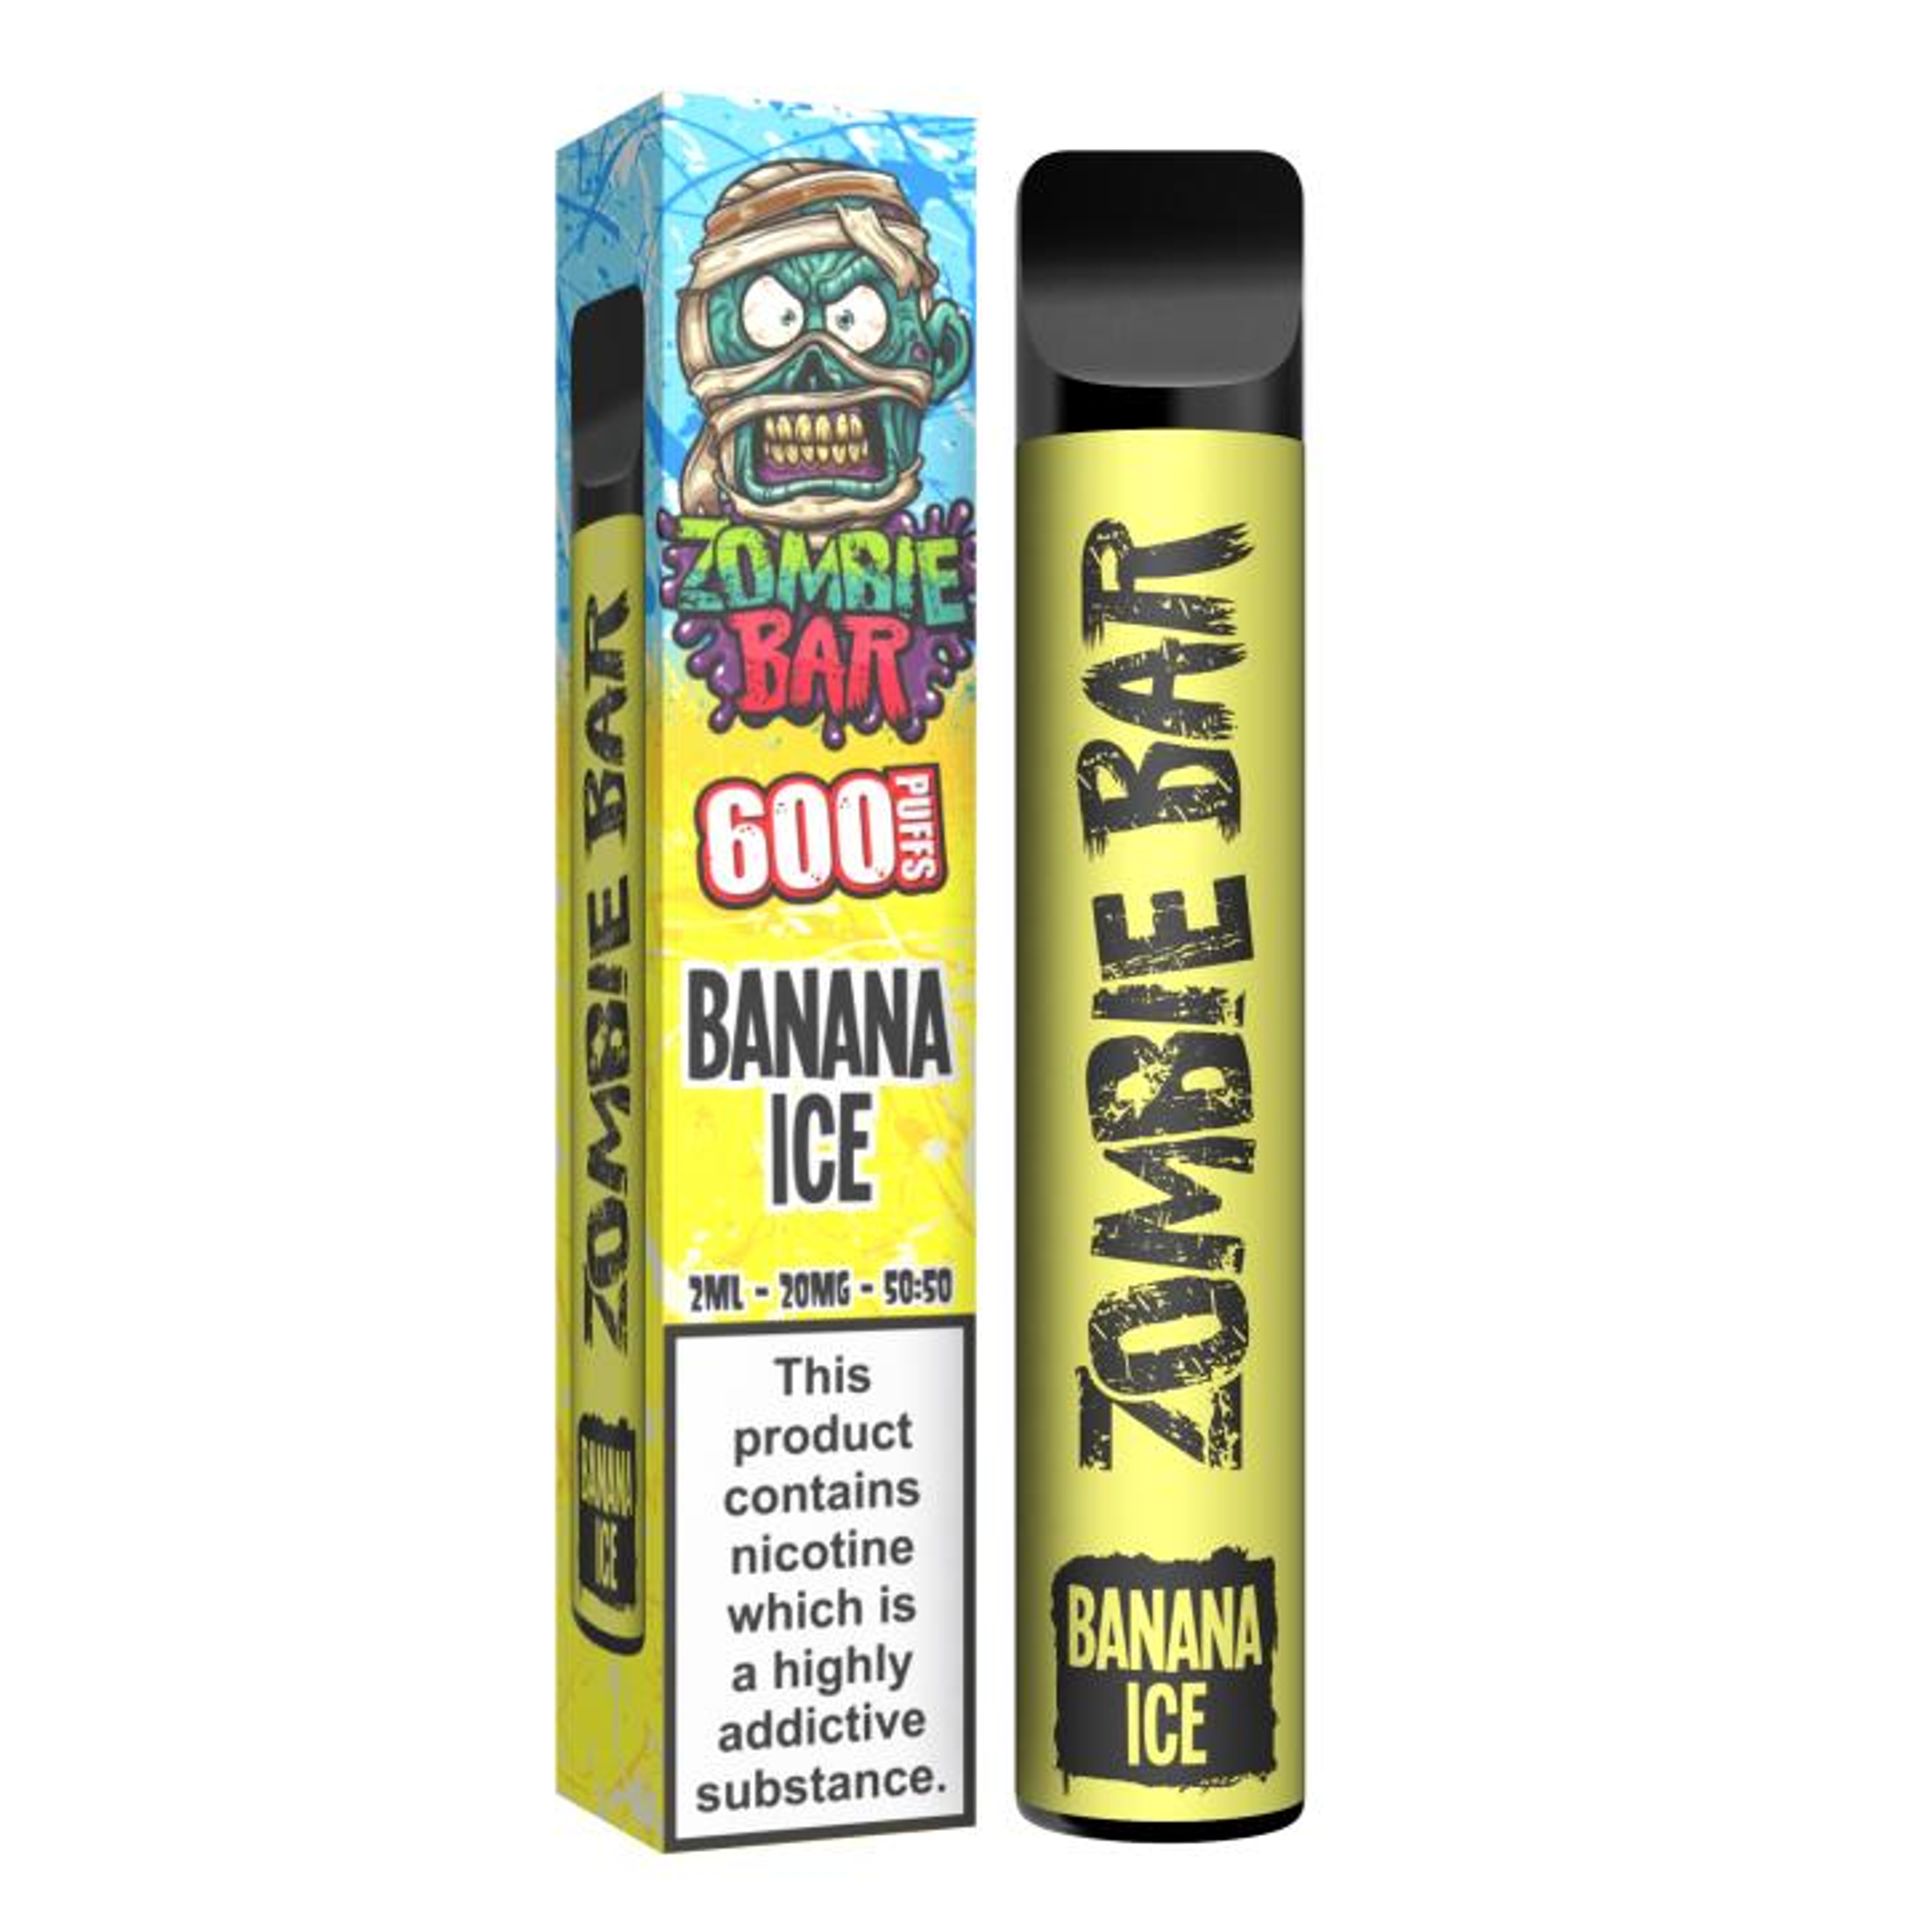 Image of Banana Ice by Zombie Bar